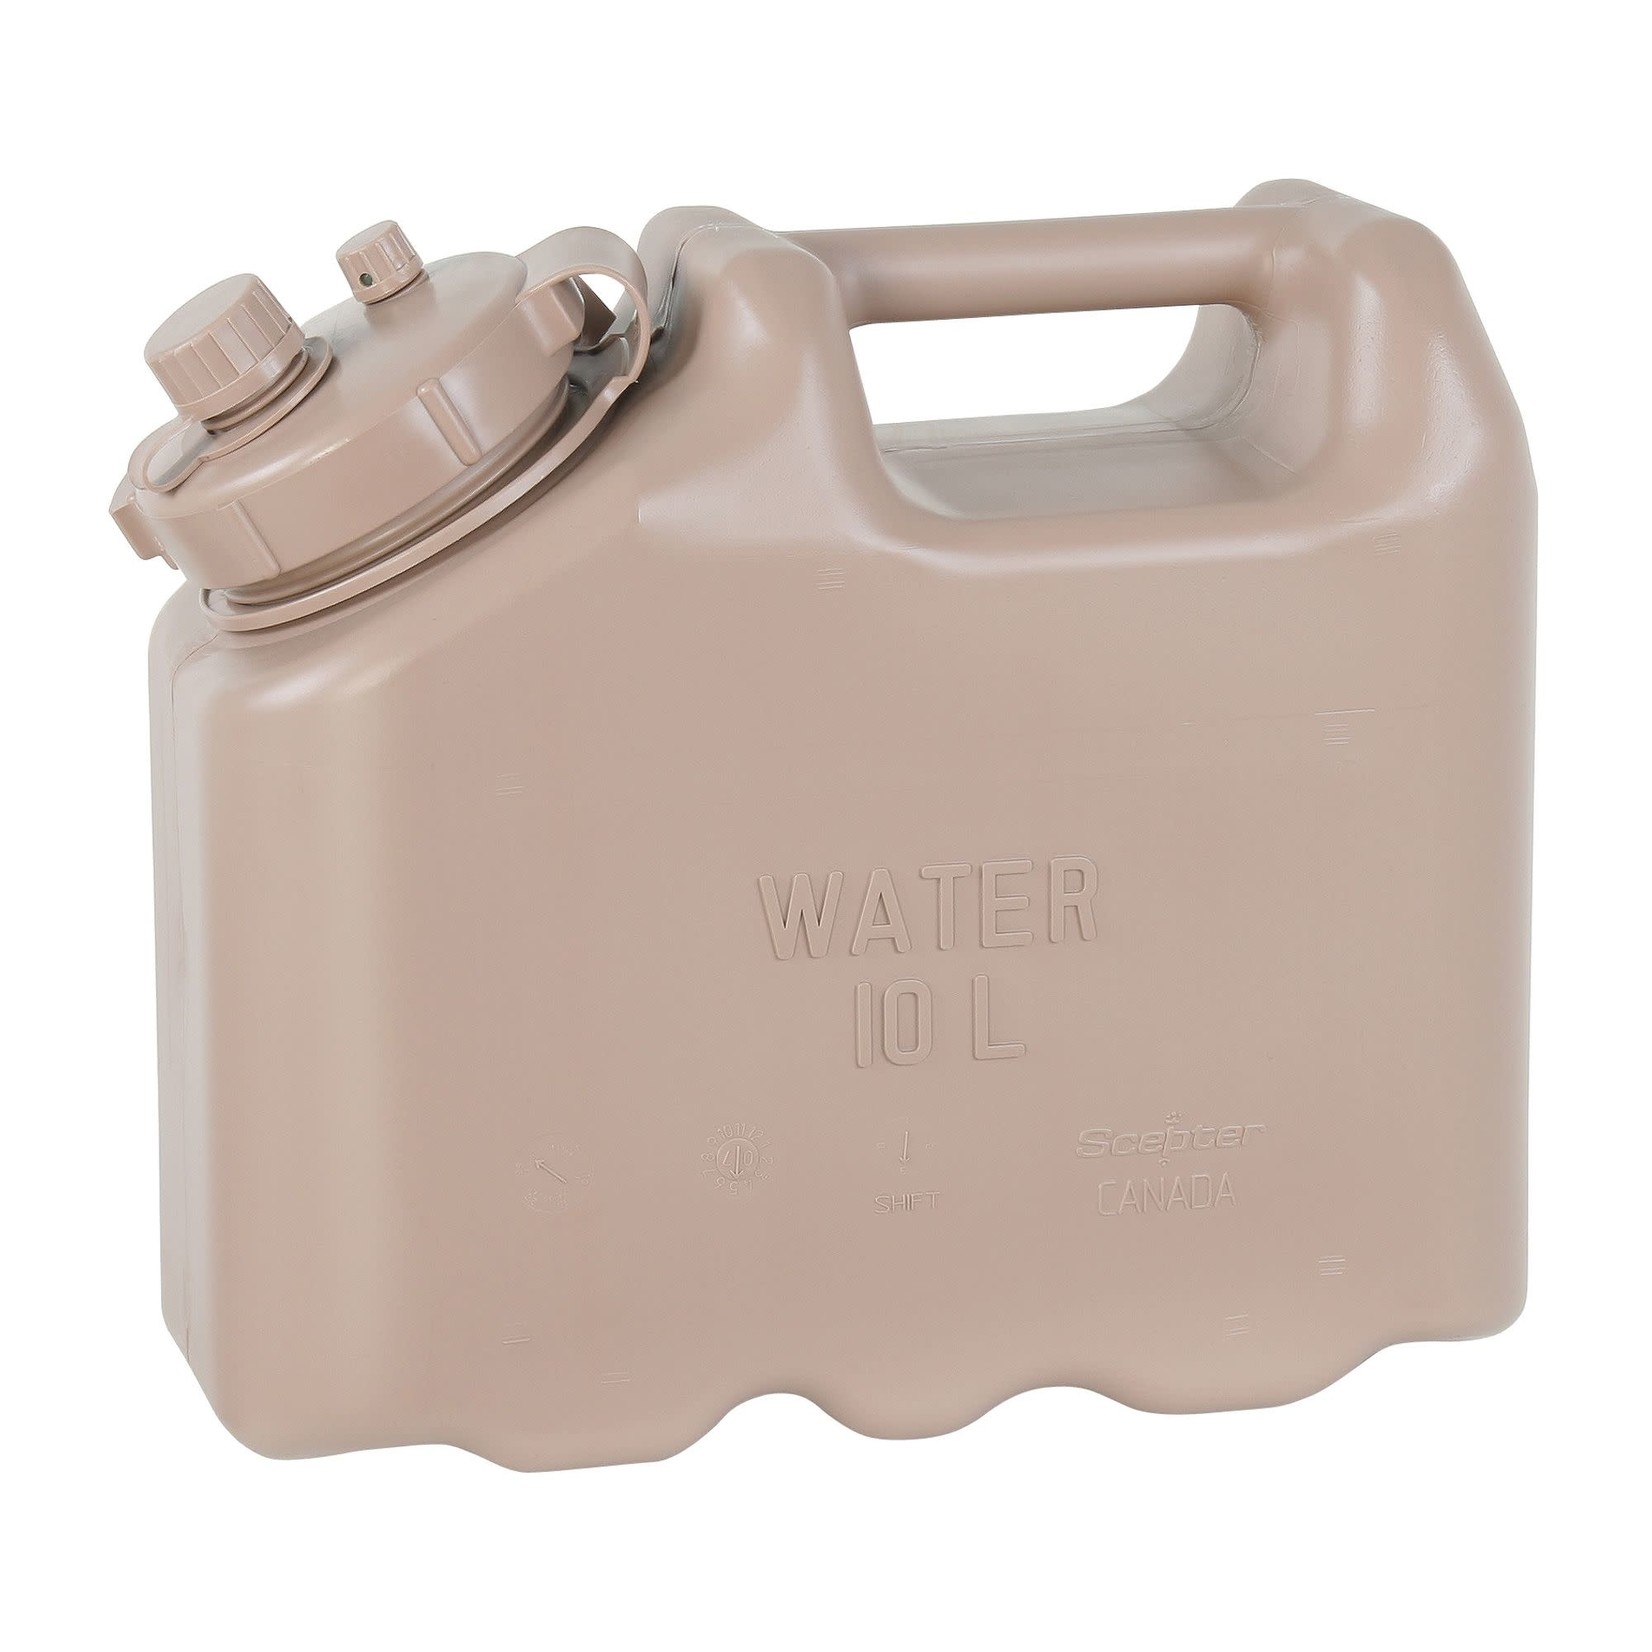 Scepter Scepter Water Jug, 10 Liter